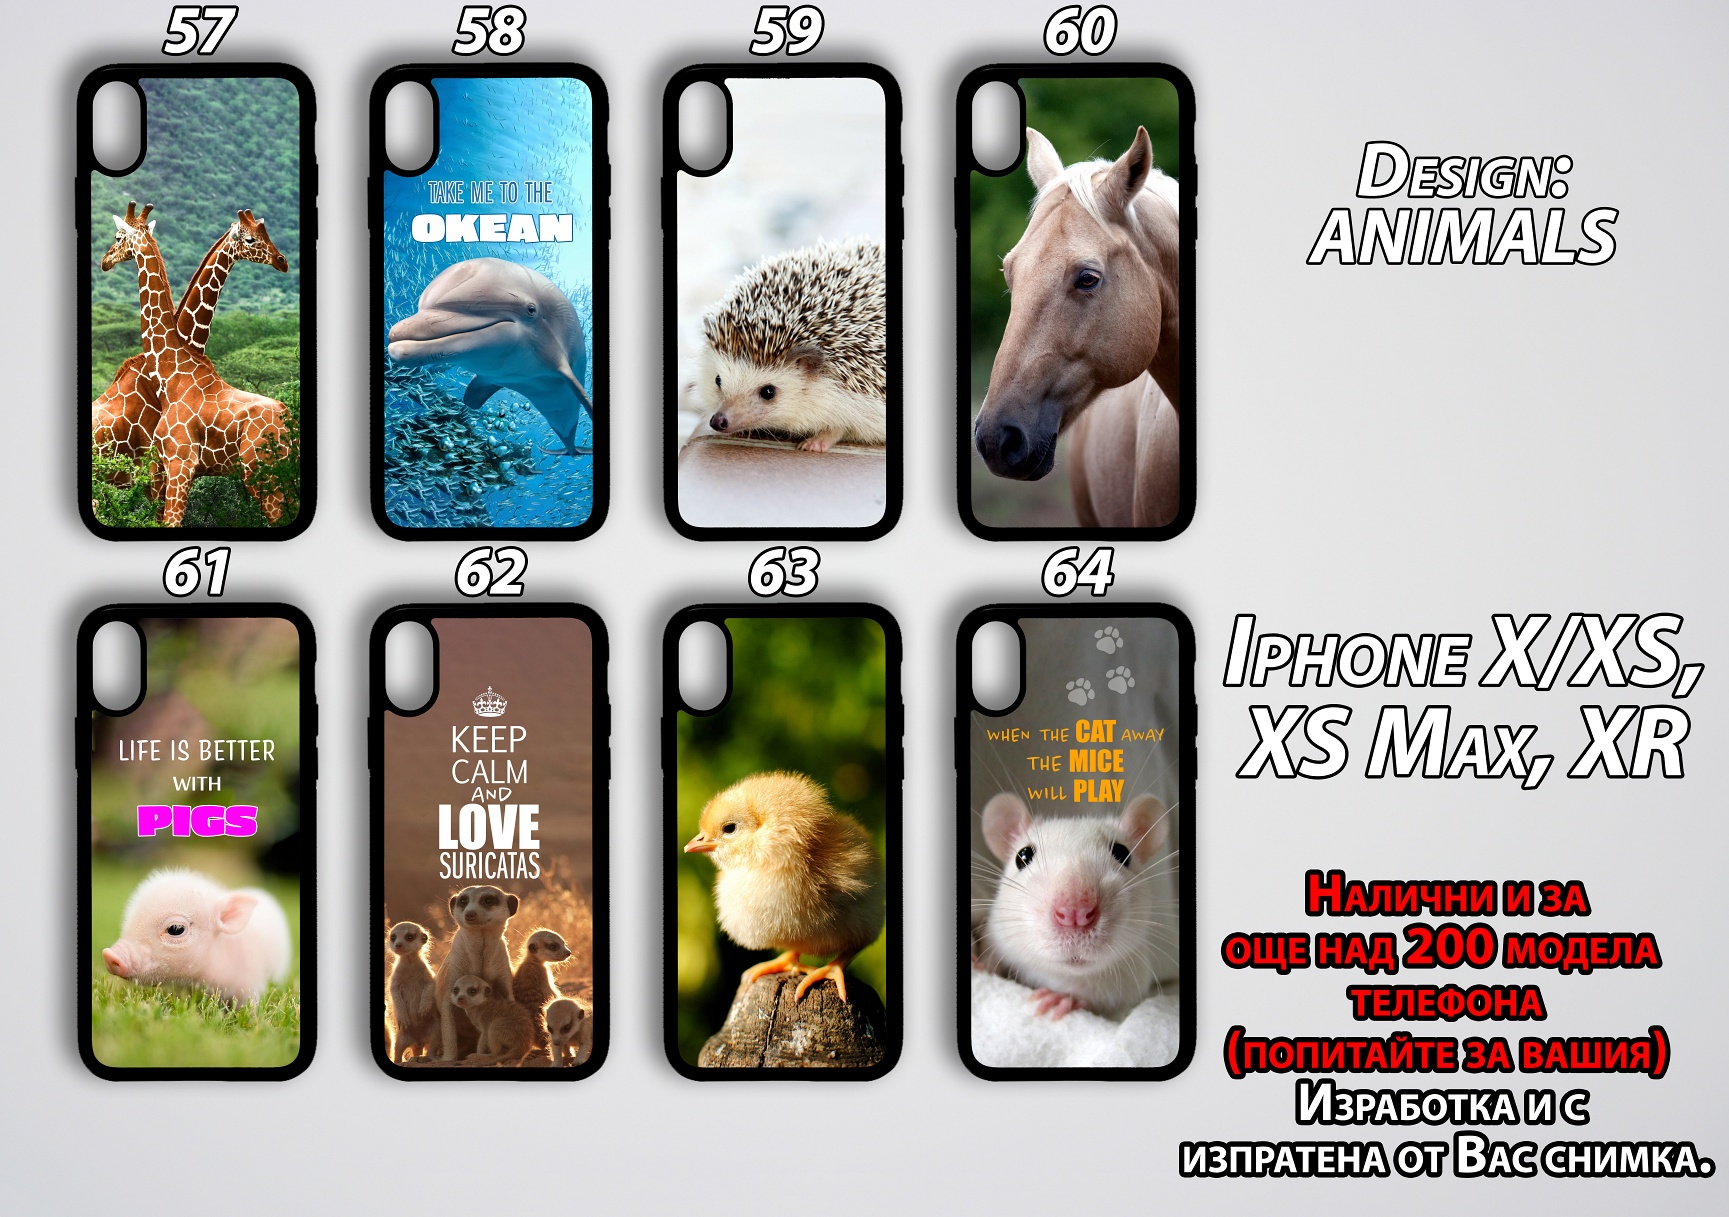 mobile phone cases NEW-Animals 57